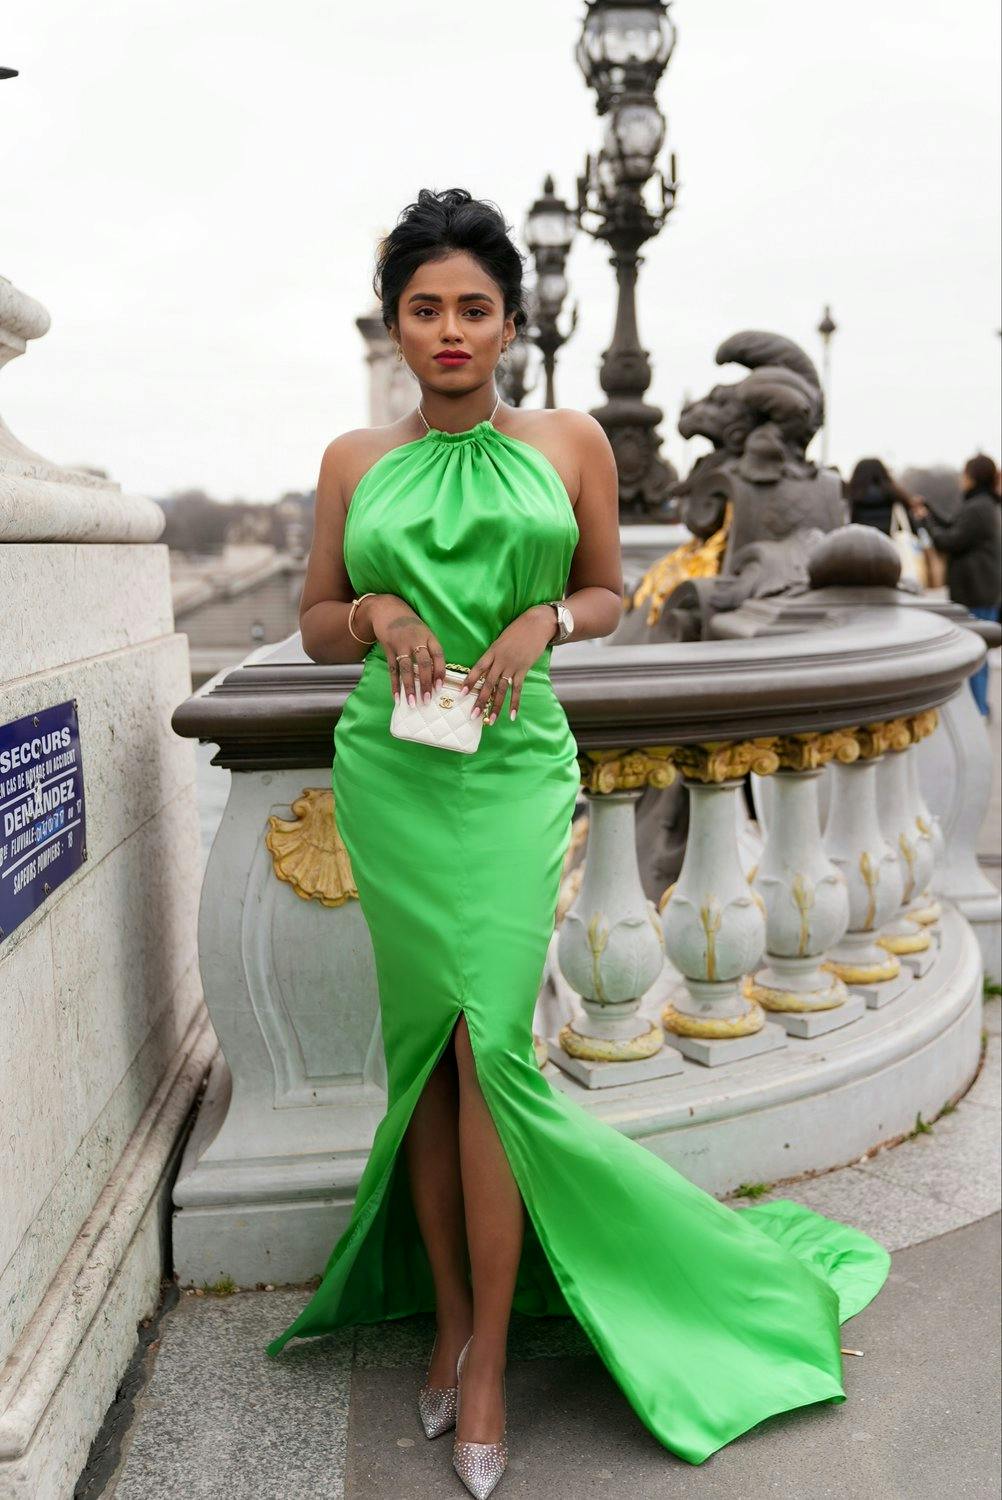 Sachini Dilanka wearing a green dress in Paris